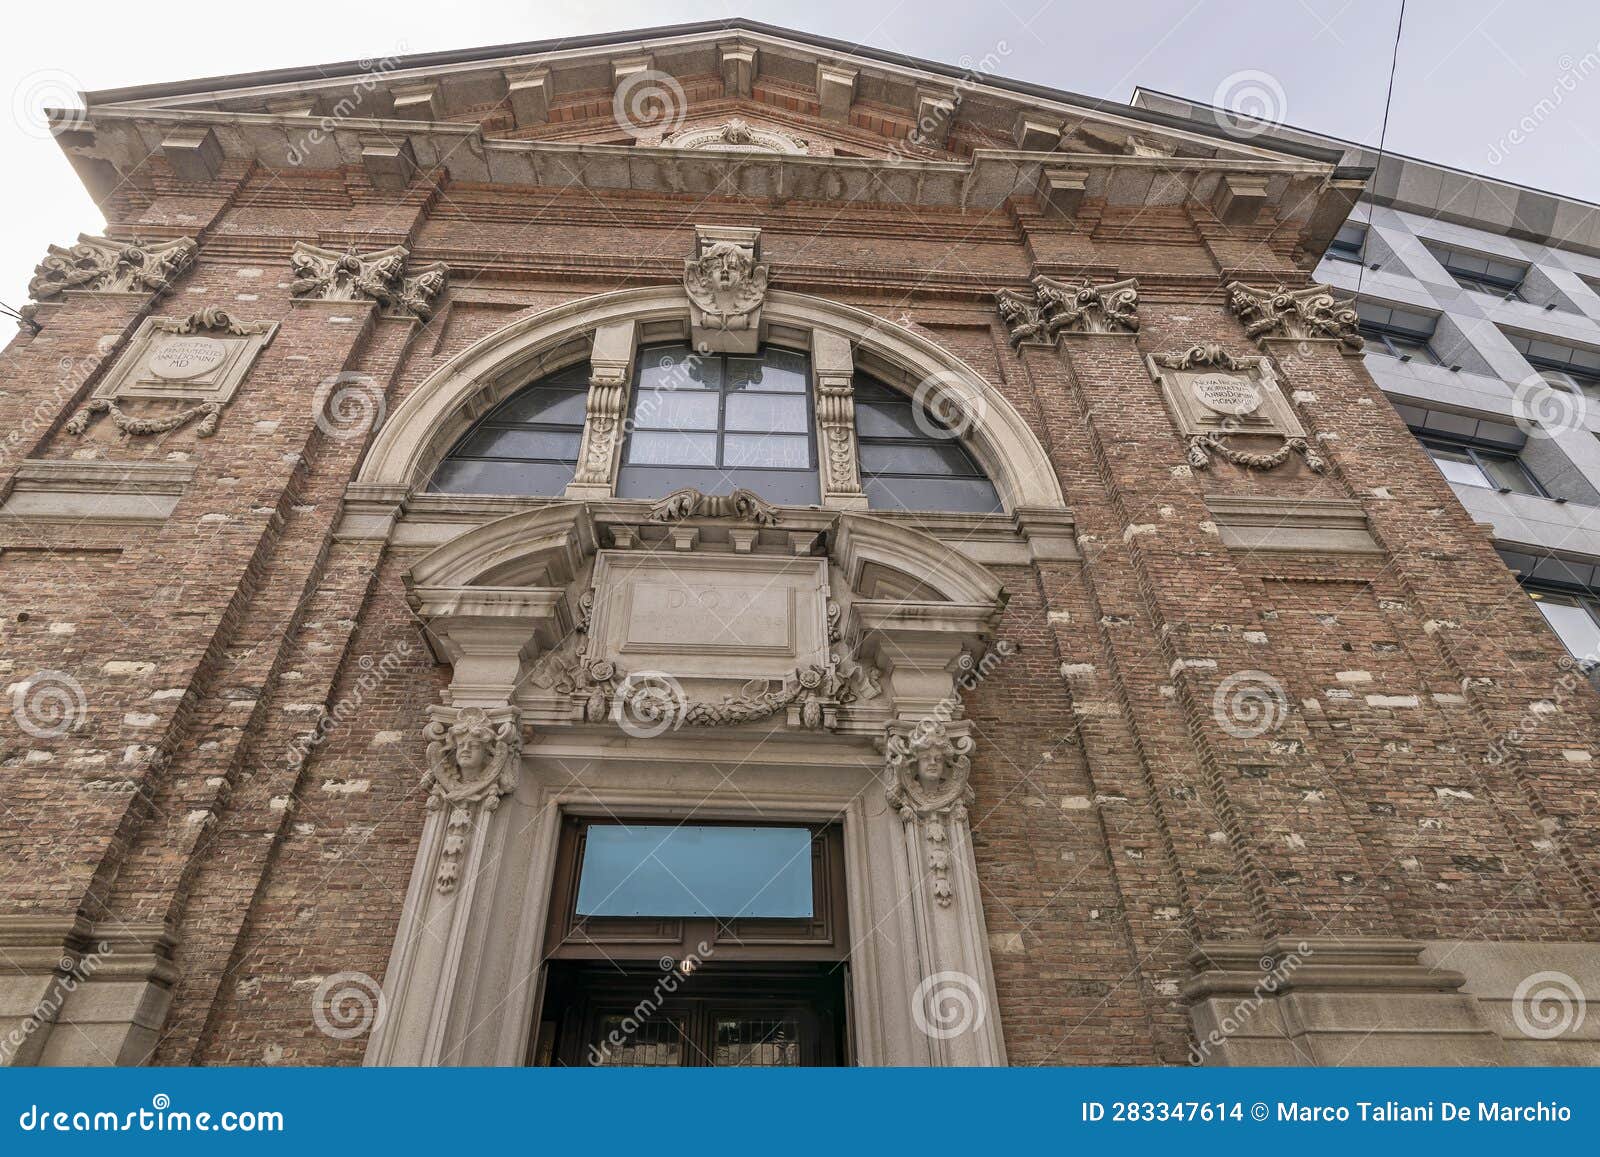 the facade of the church of sant'antonio abate, lugano, switzerland